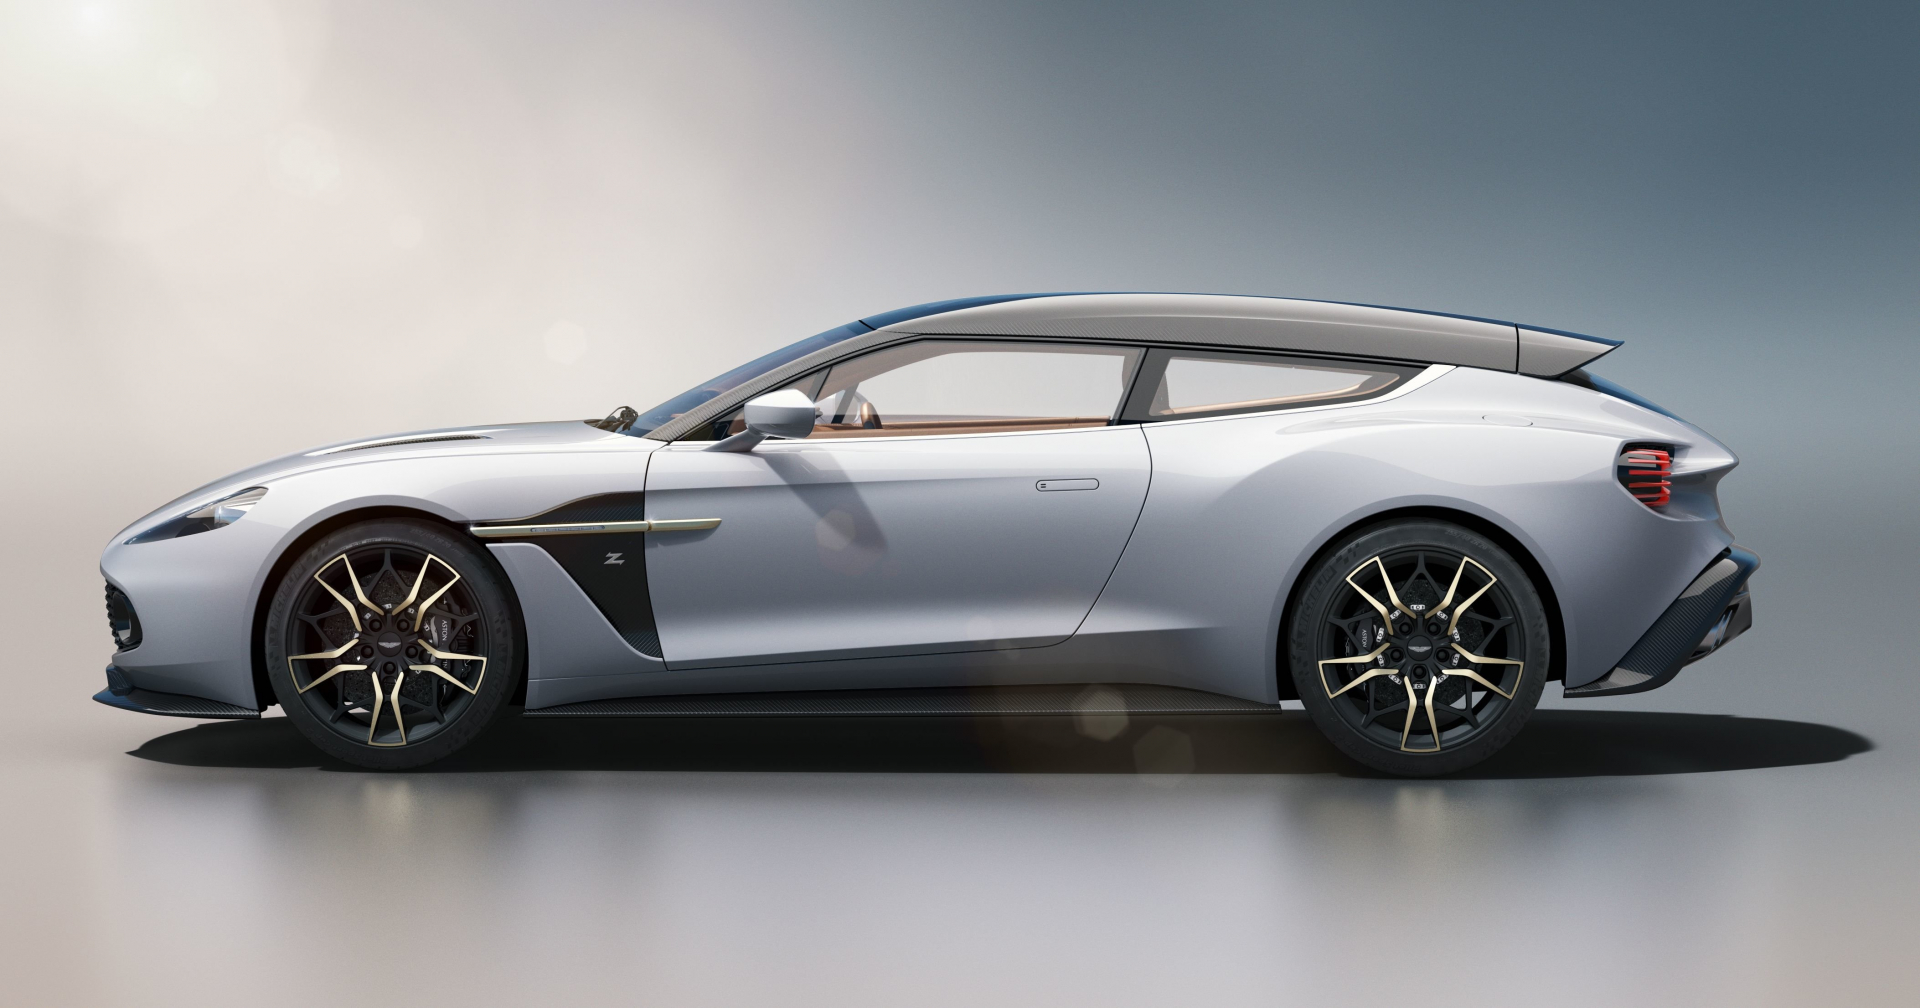 Aston Martin’in Yeni Aracı: Vanquish Zagato